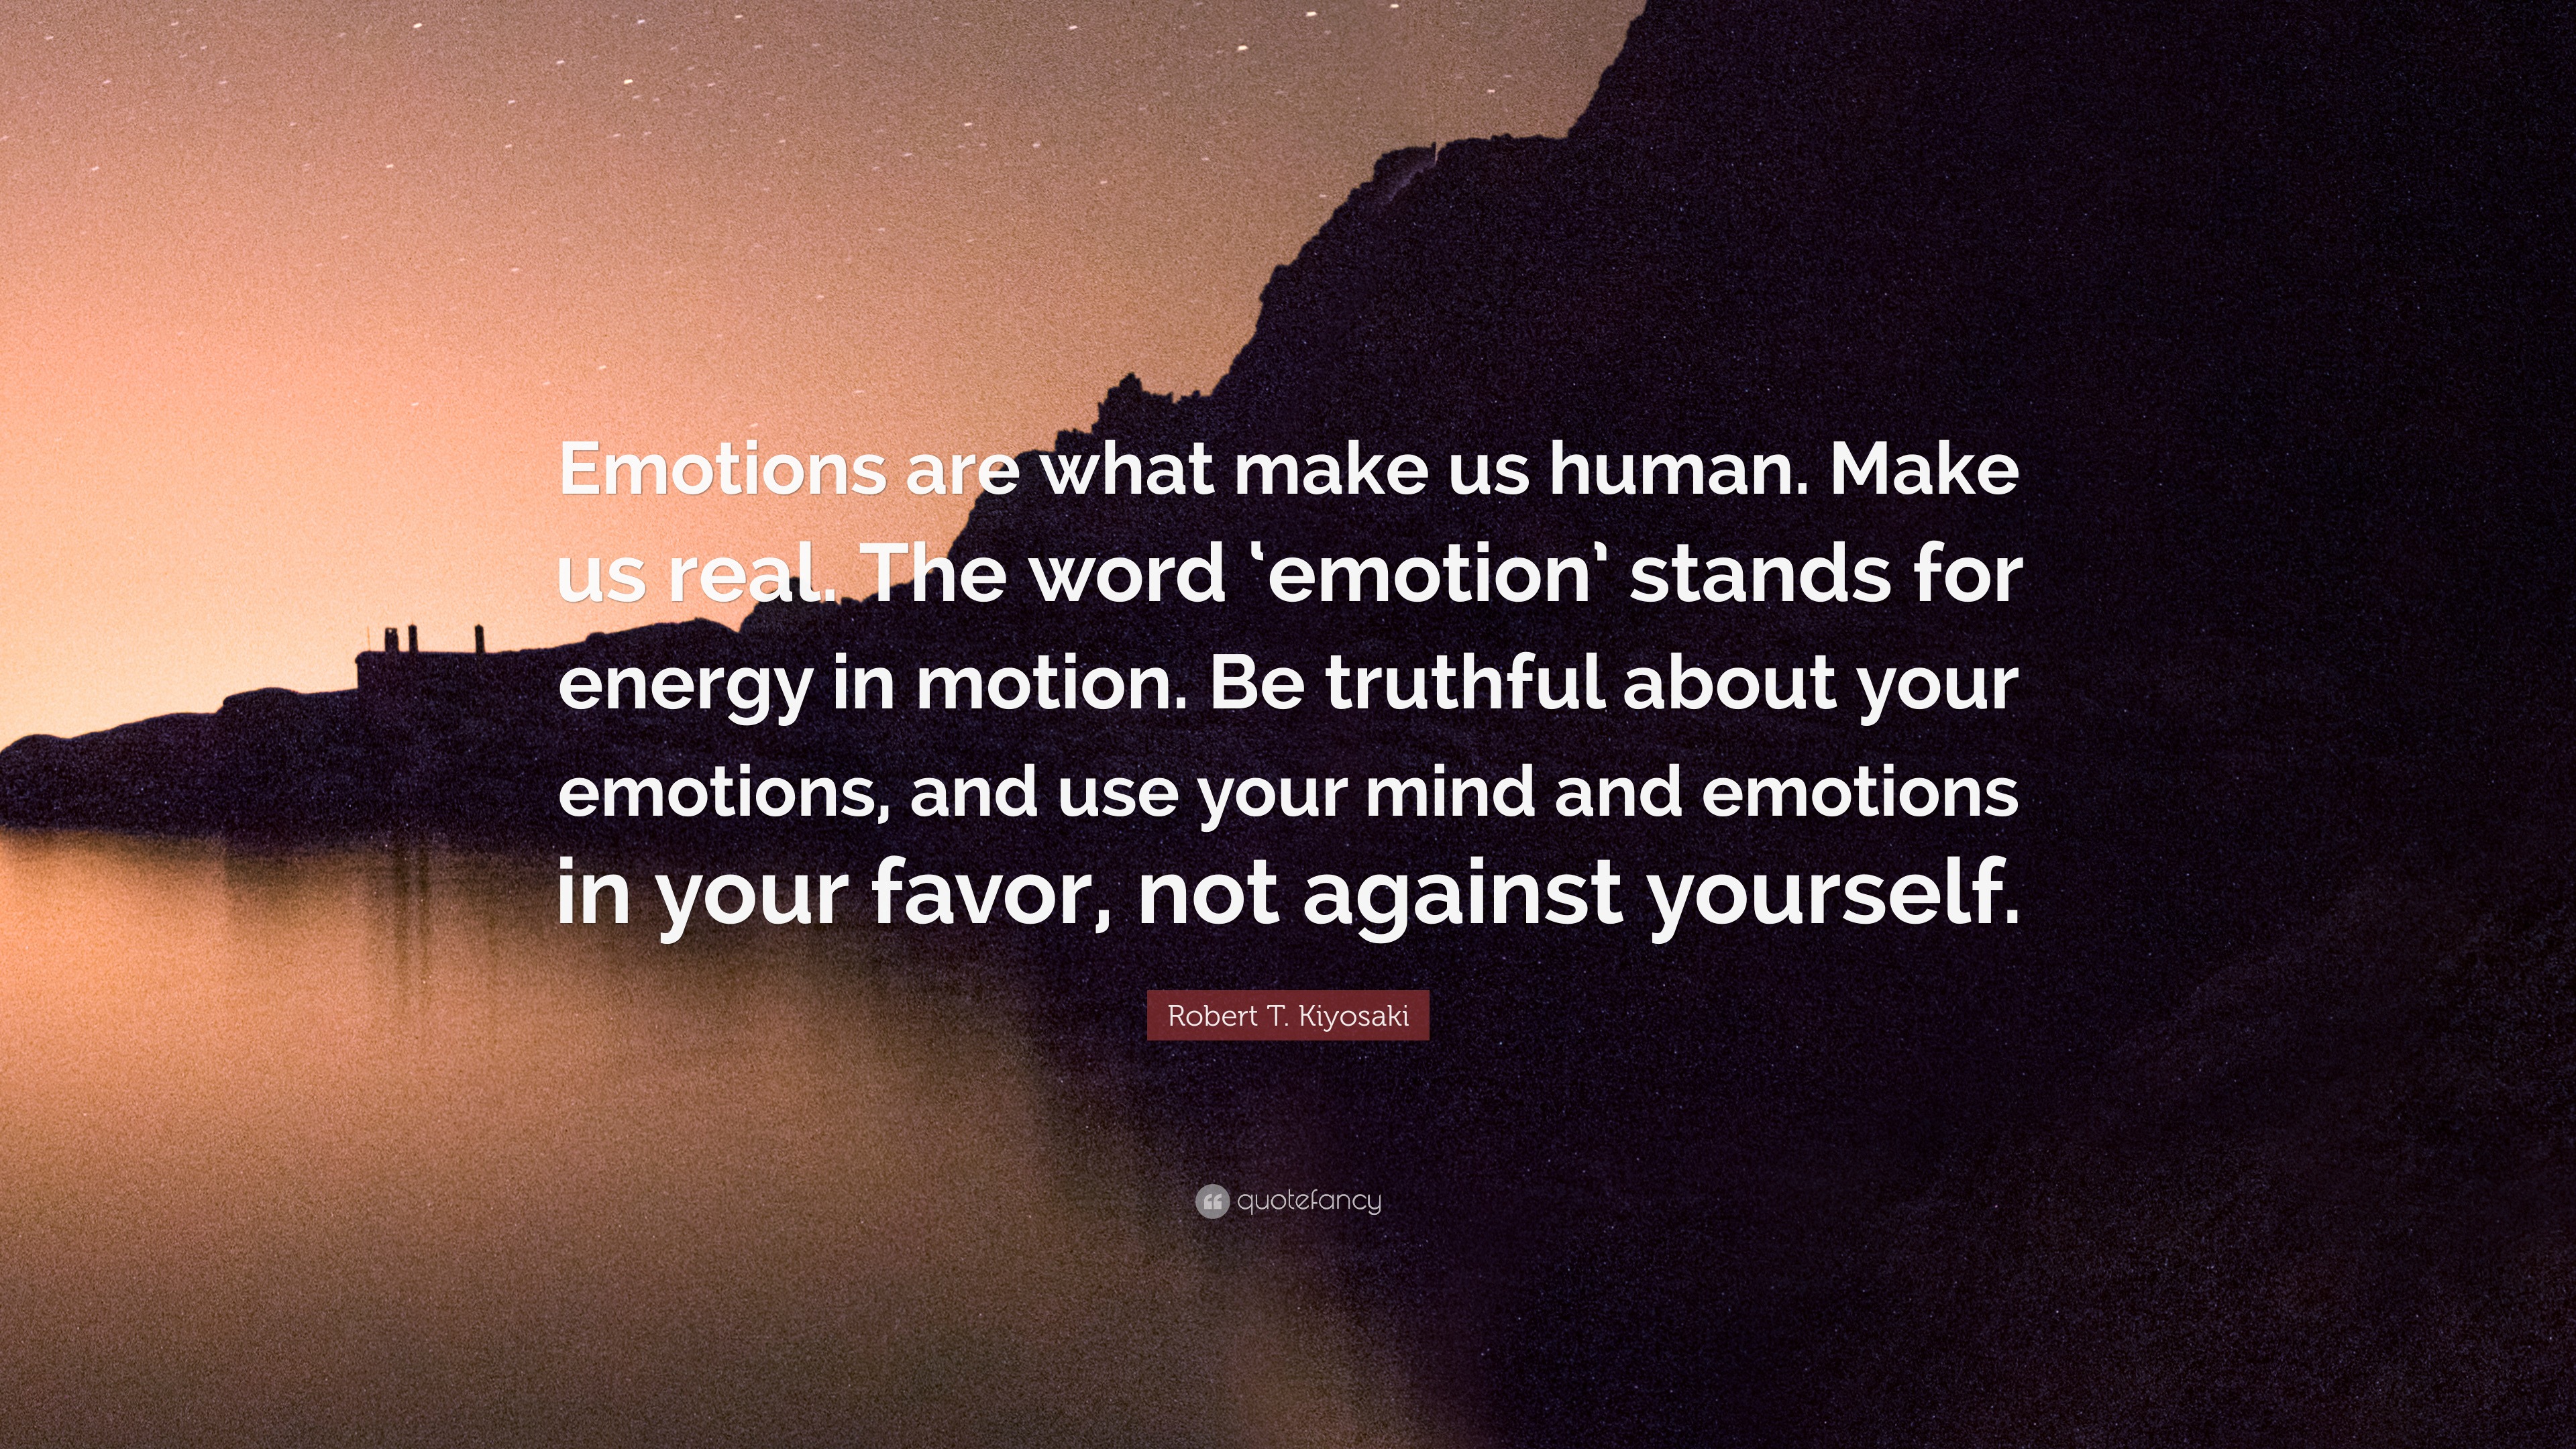 Robert T. Kiyosaki Quote: “Emotions are what make us human. Make us